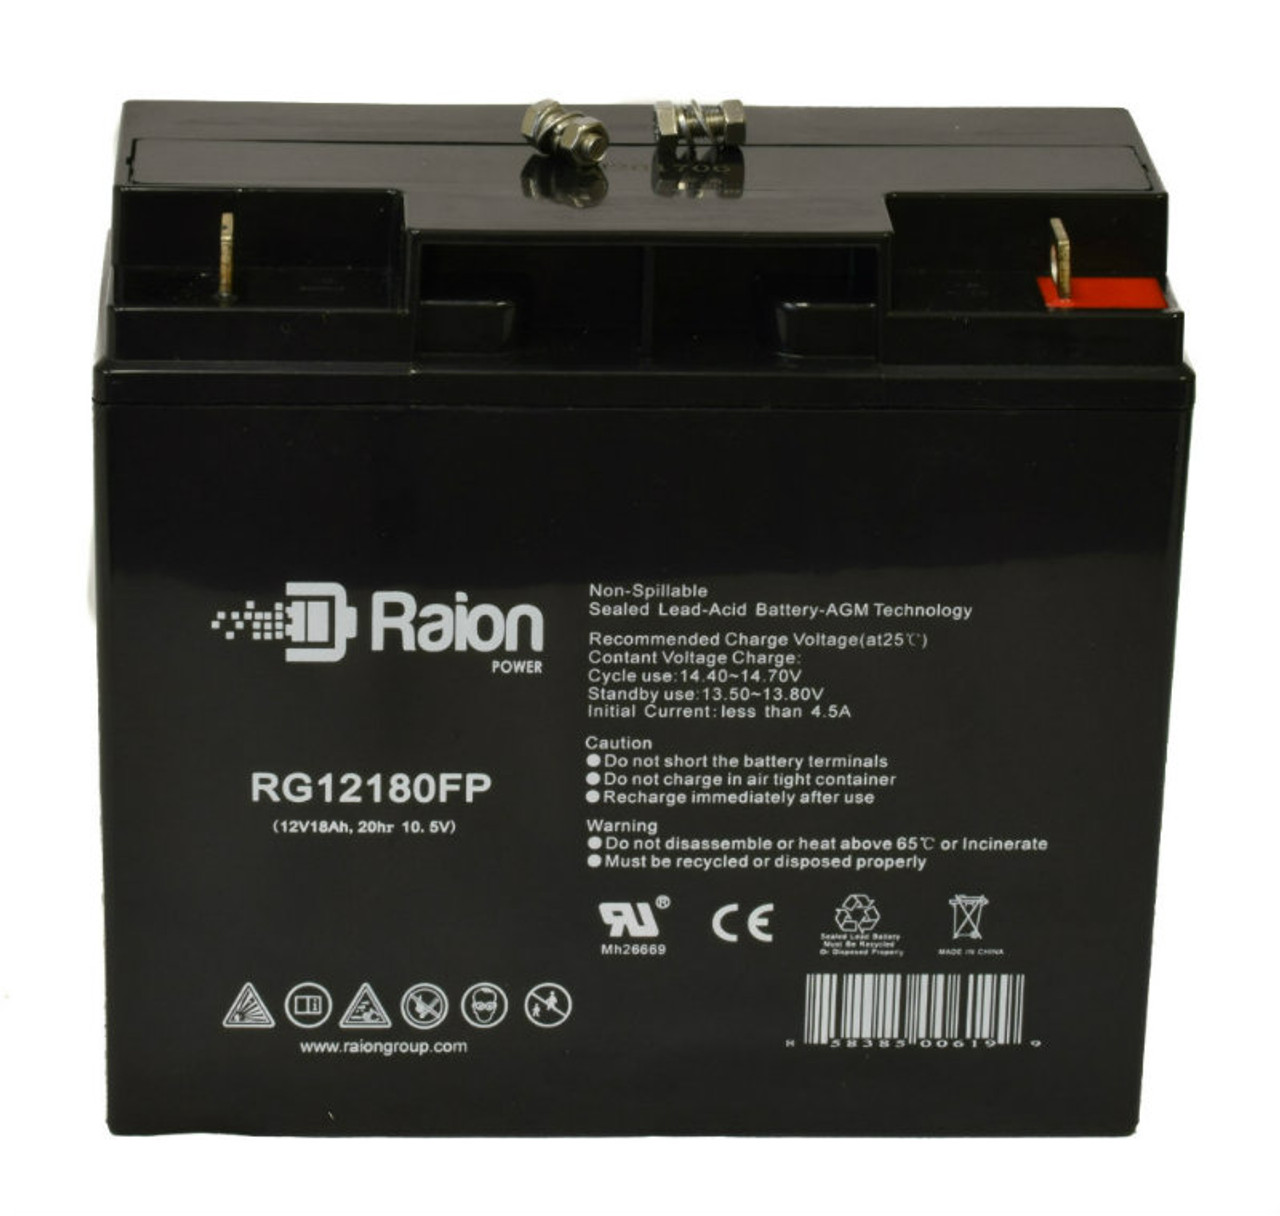 Raion Power RG12180FP 12V 18Ah Lead Acid Battery for DEWALT DXGN14000 Portable Generator